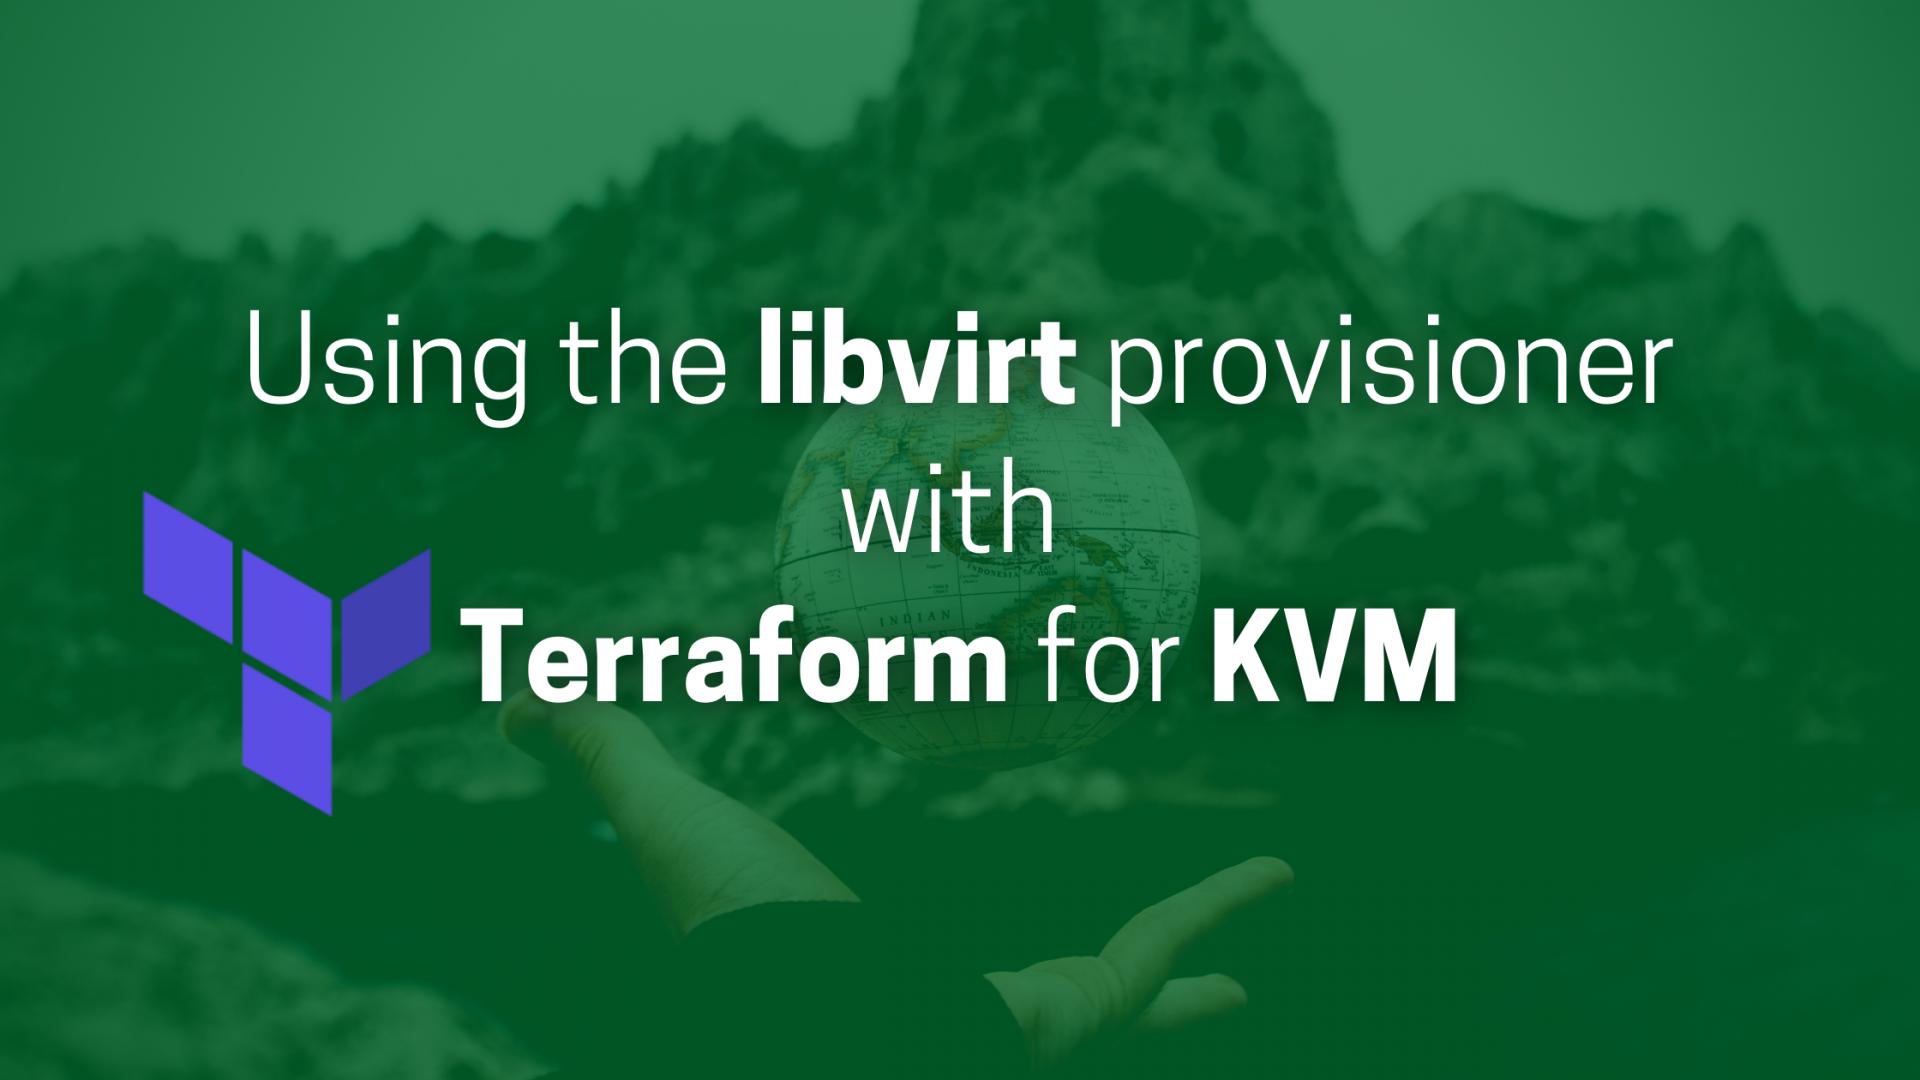 Using the libvirt provisioner with Terraform for KVM